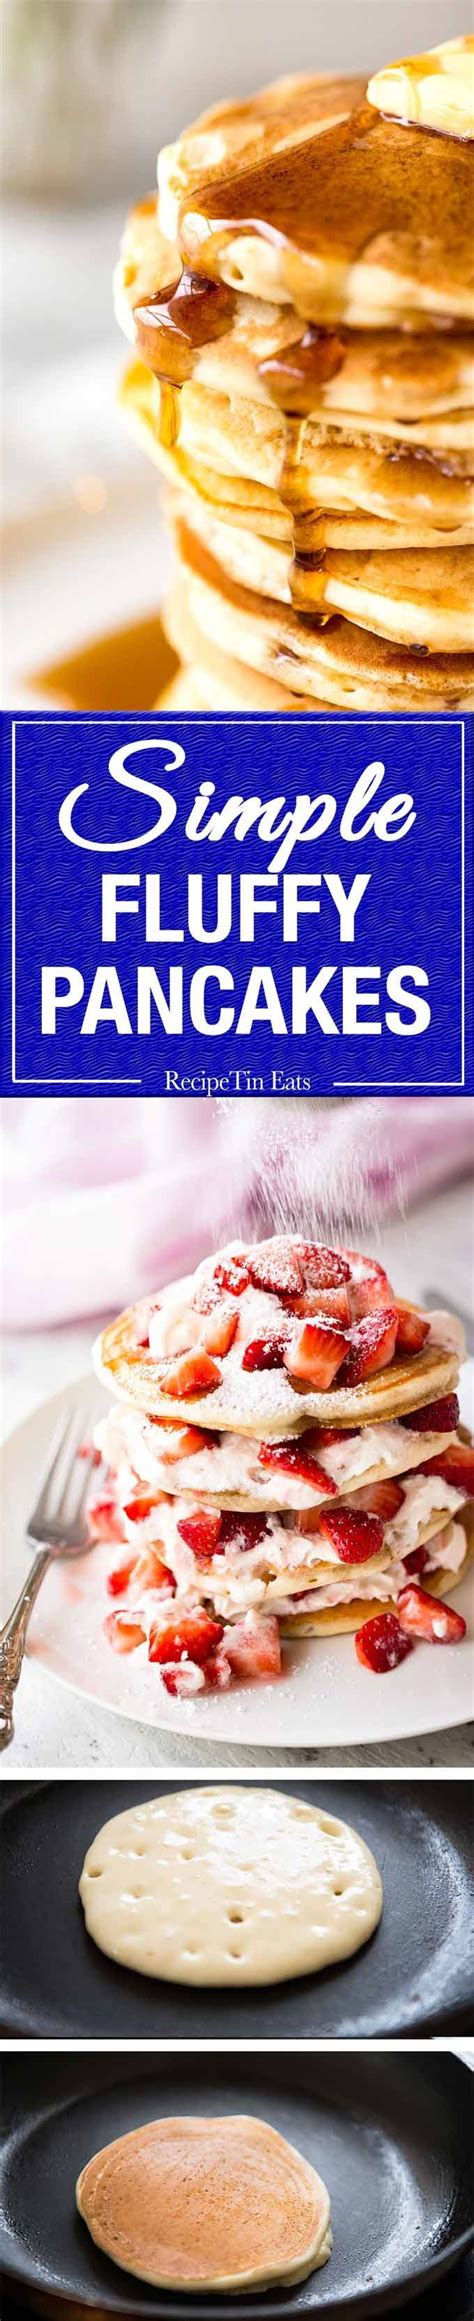 Simple Fluffy Pancakes Recipe Food Recipes Recipetin Eats Fluffy